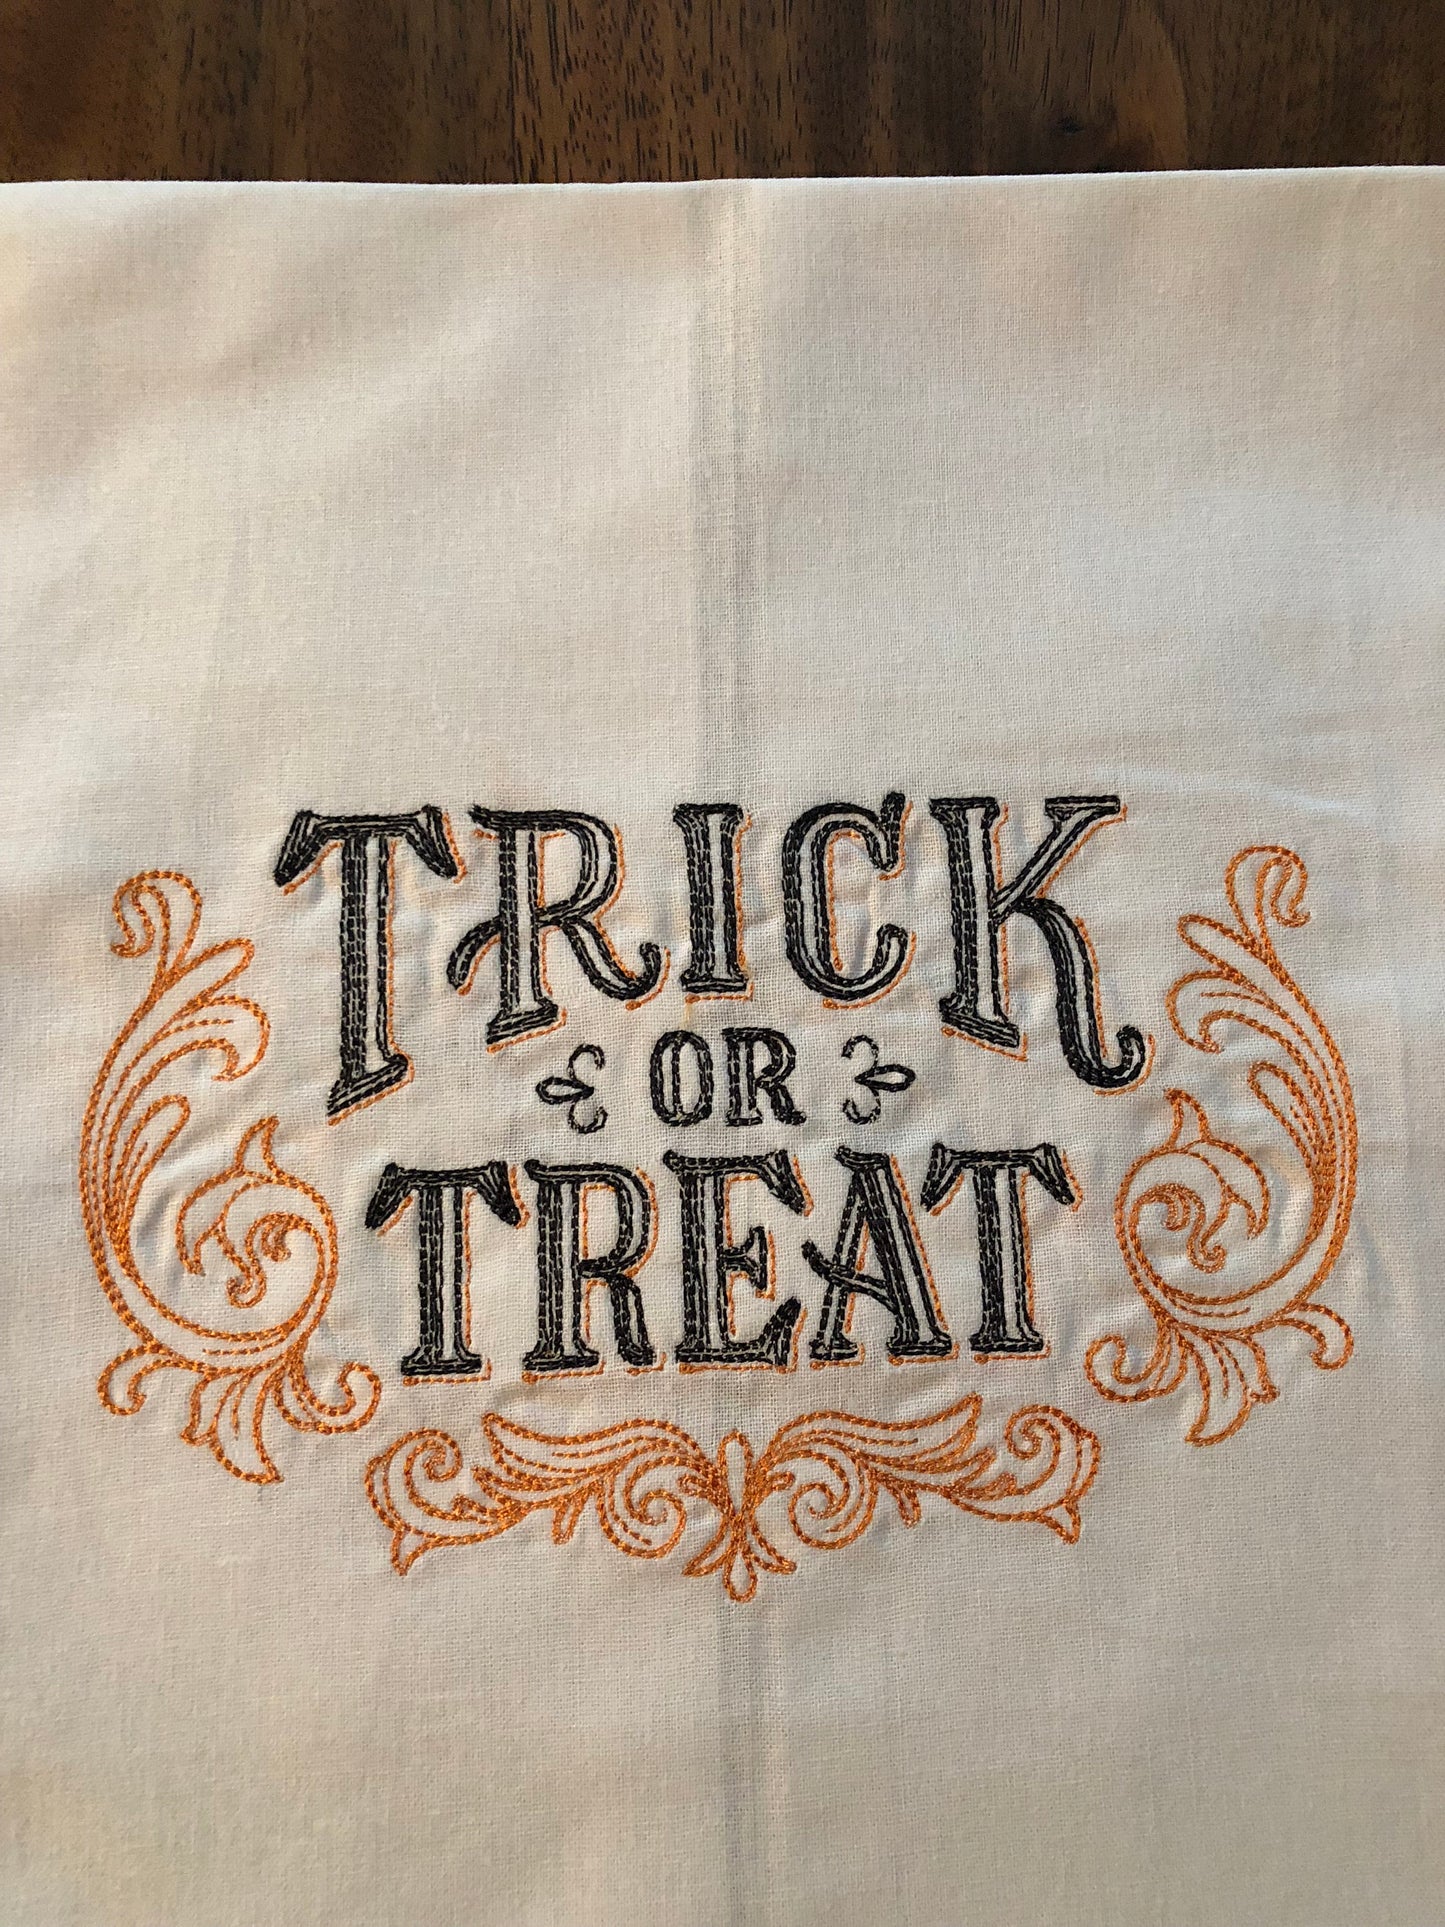 Halloween Trick or Treat Towel